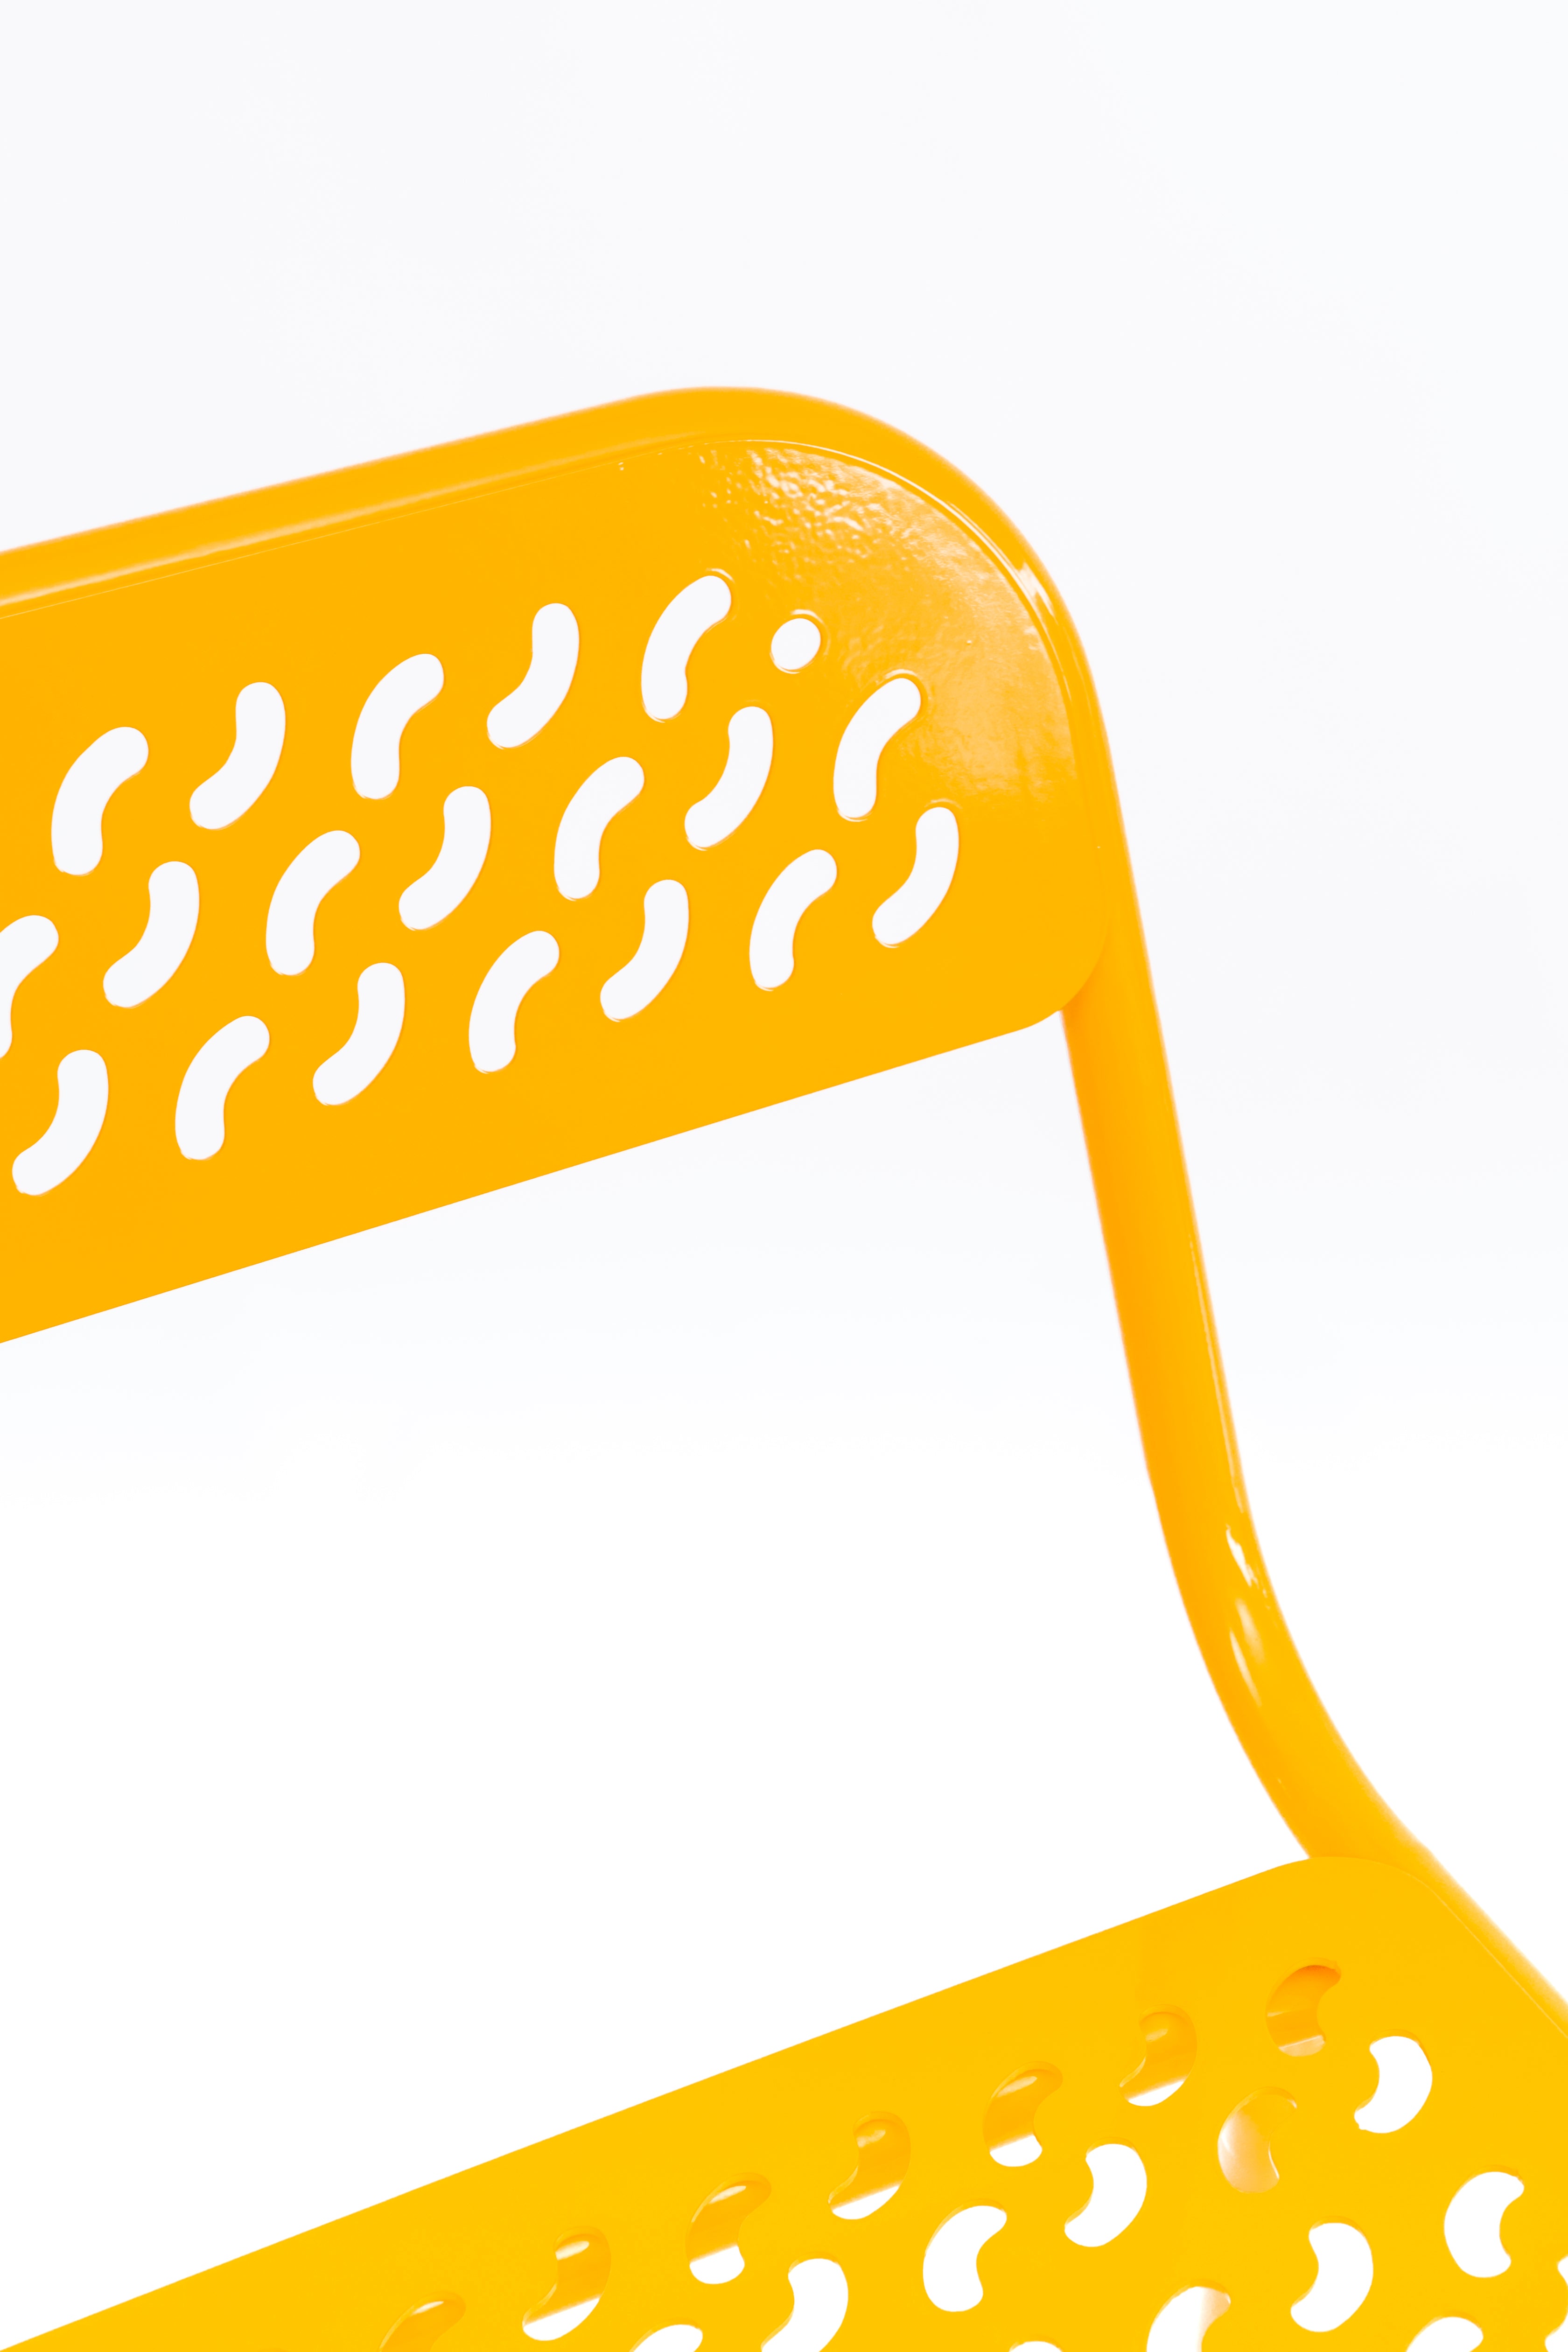 Futura Pattern Chair